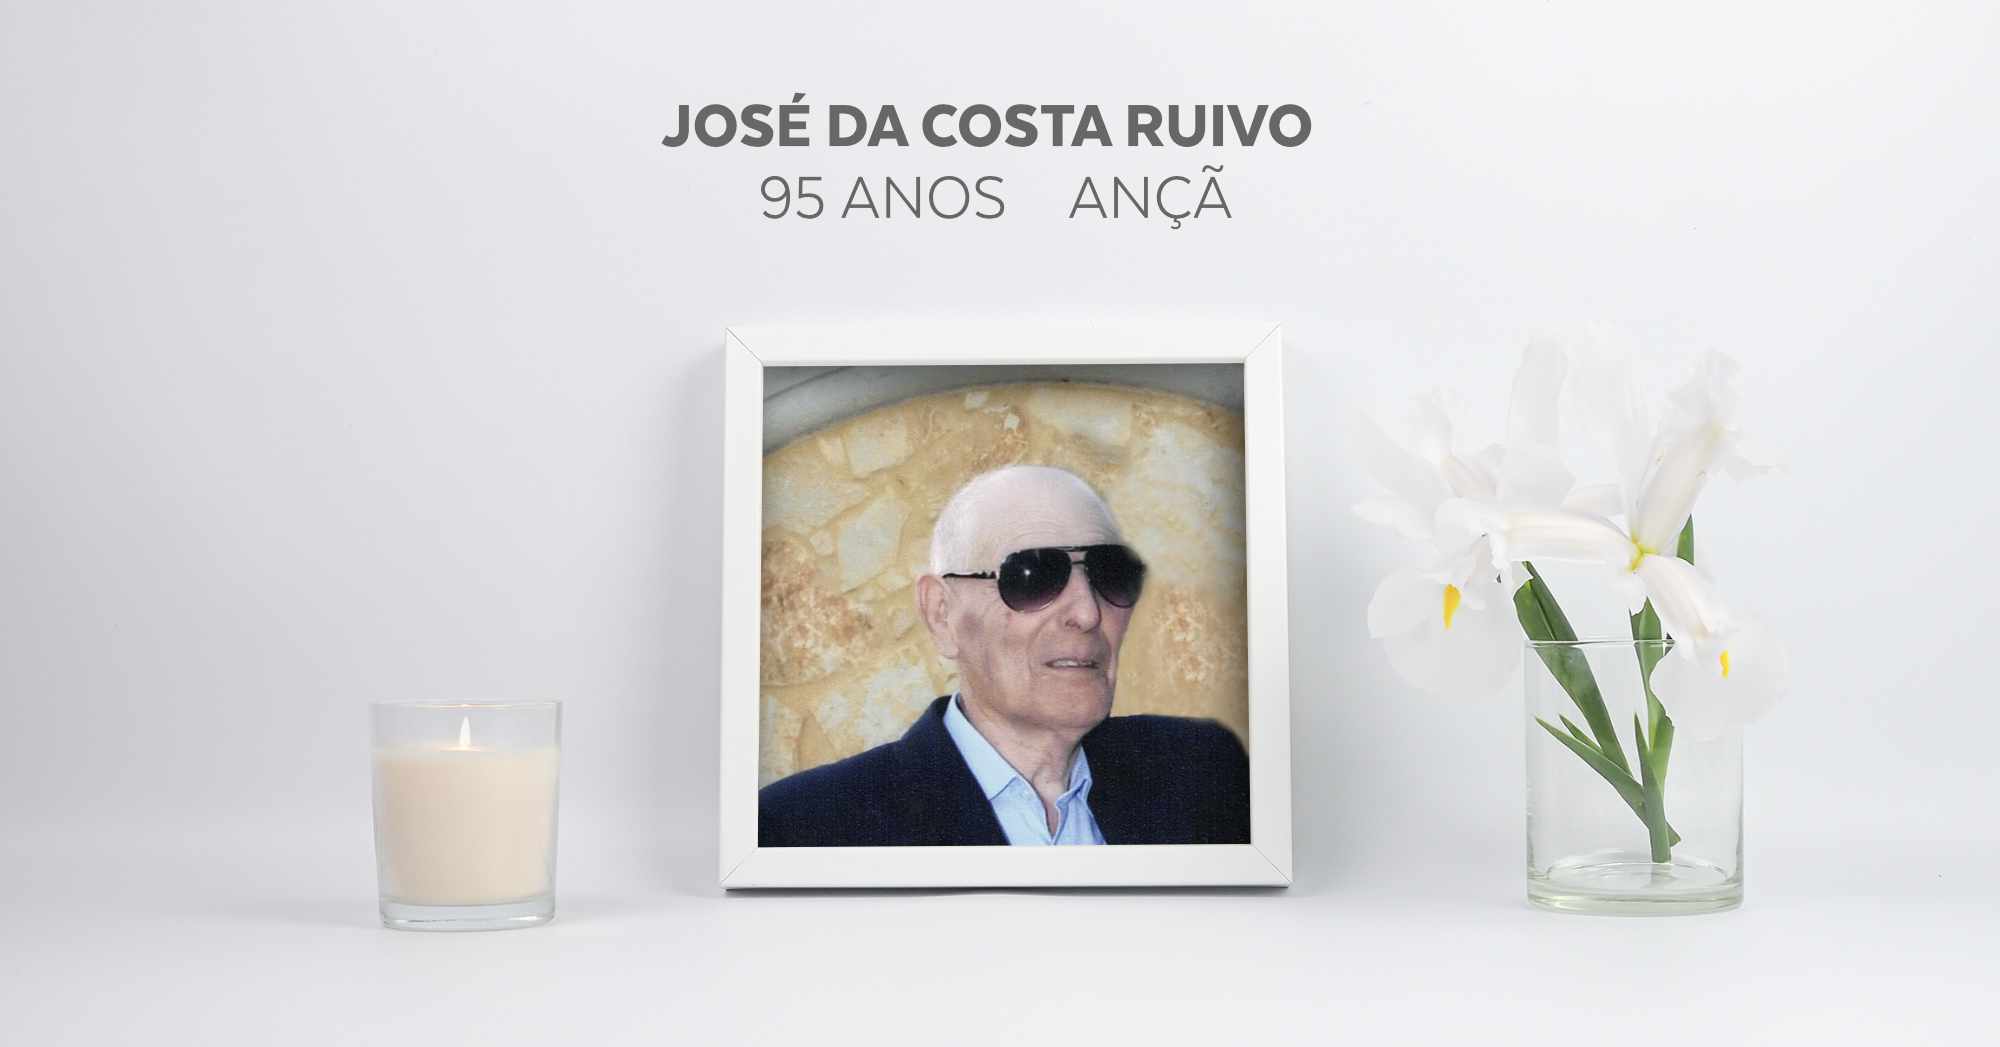 José da Costa Ruivo